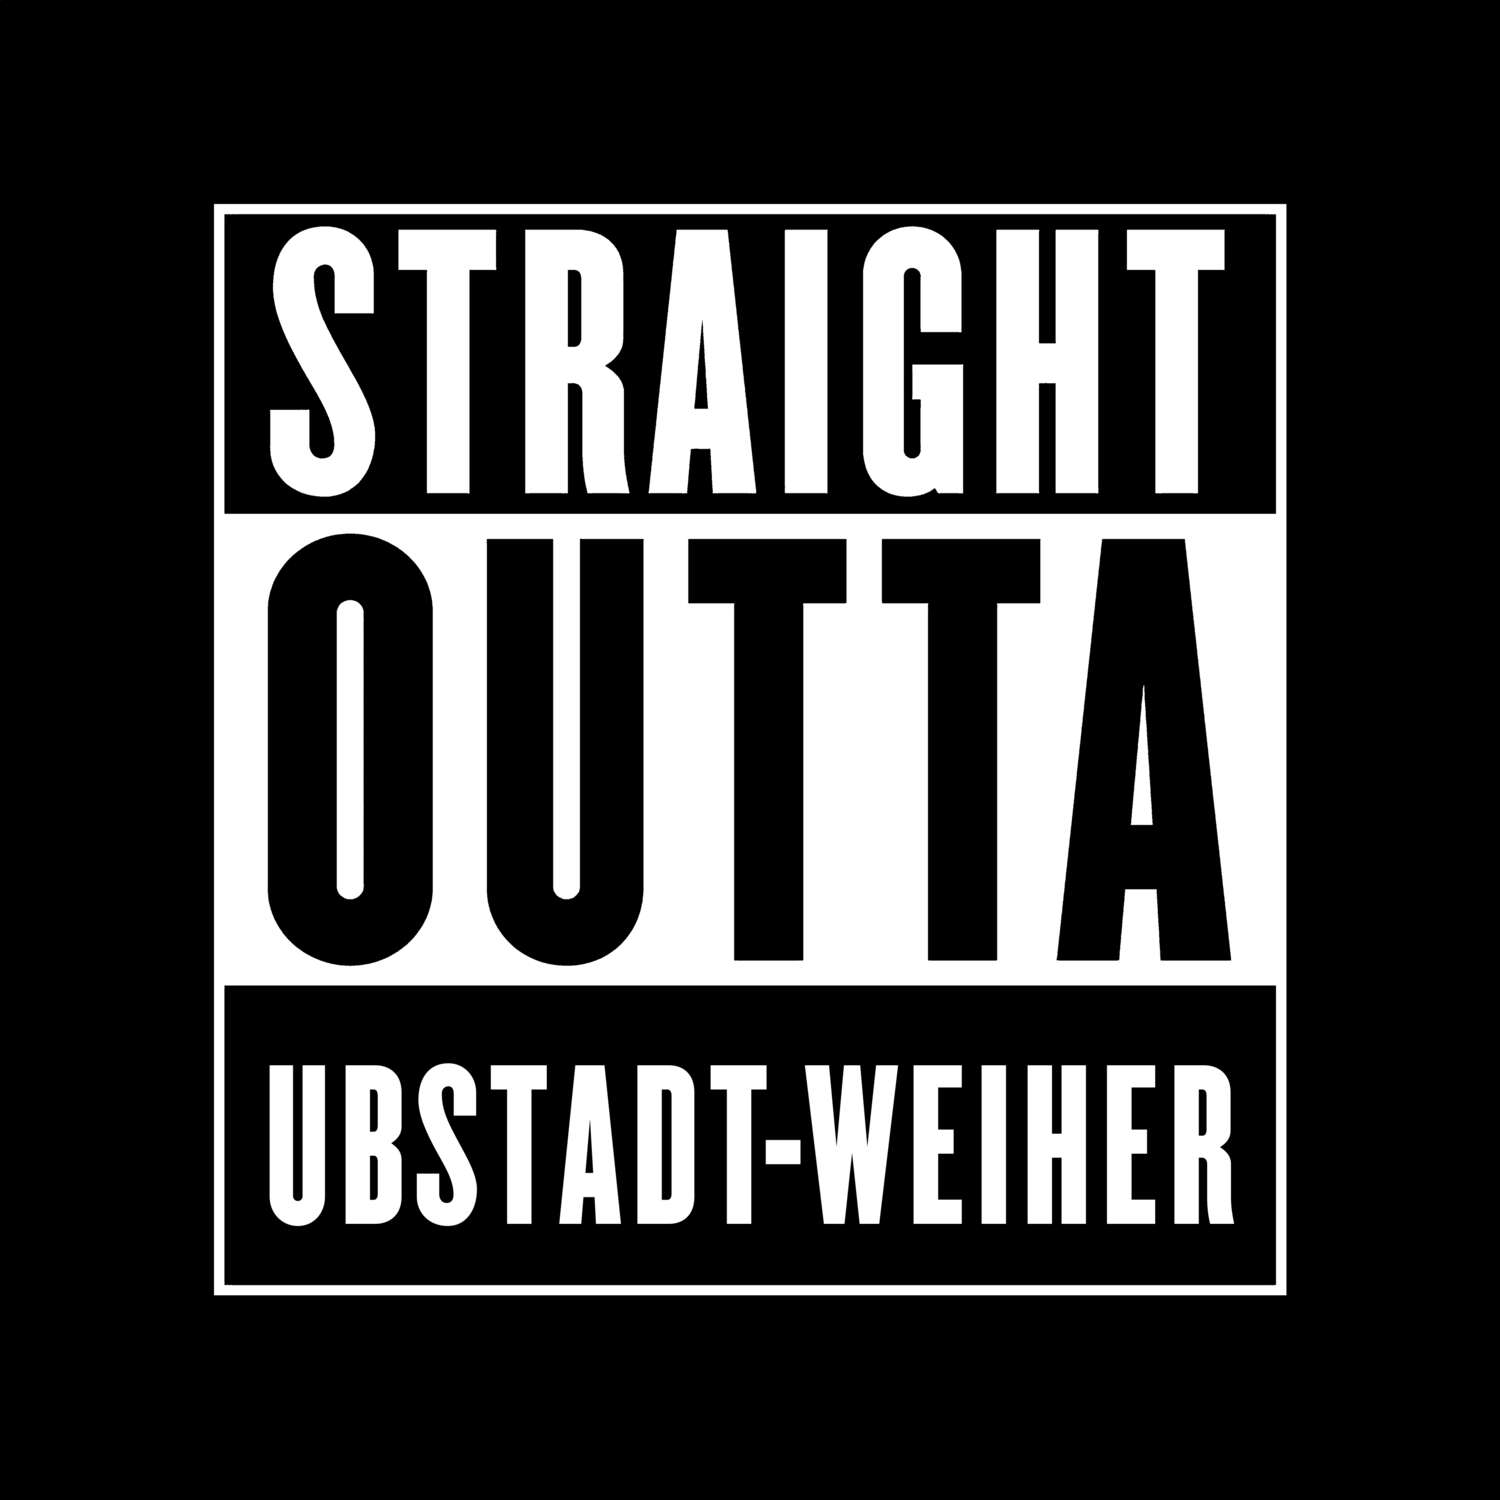 Ubstadt-Weiher T-Shirt »Straight Outta«